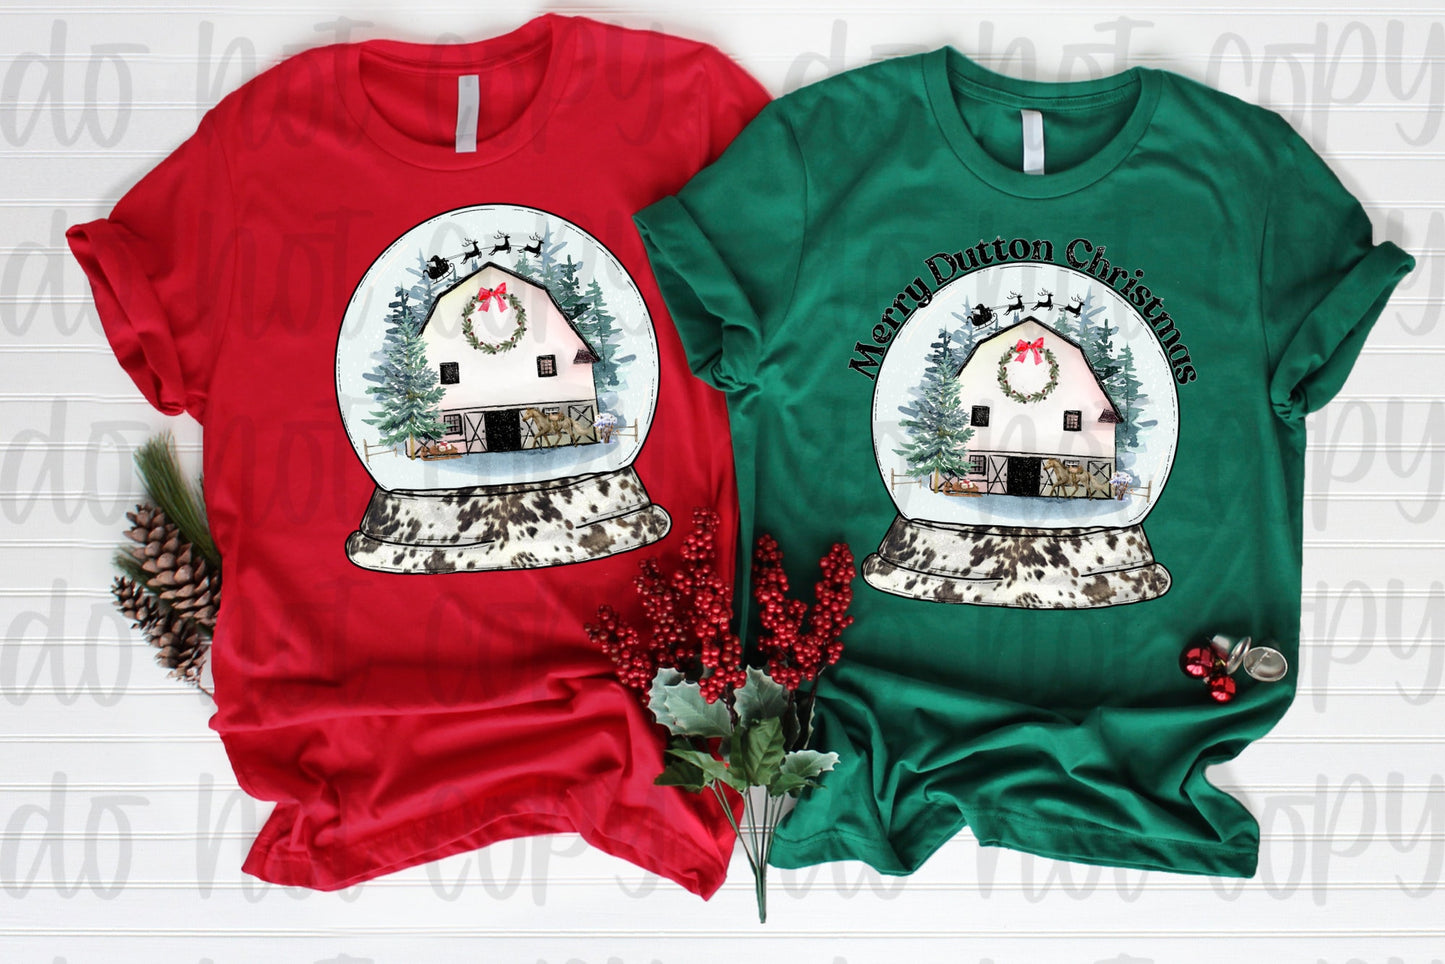 Merry Dutton Christmas Snow Globe with 2 surprise bonus designs!